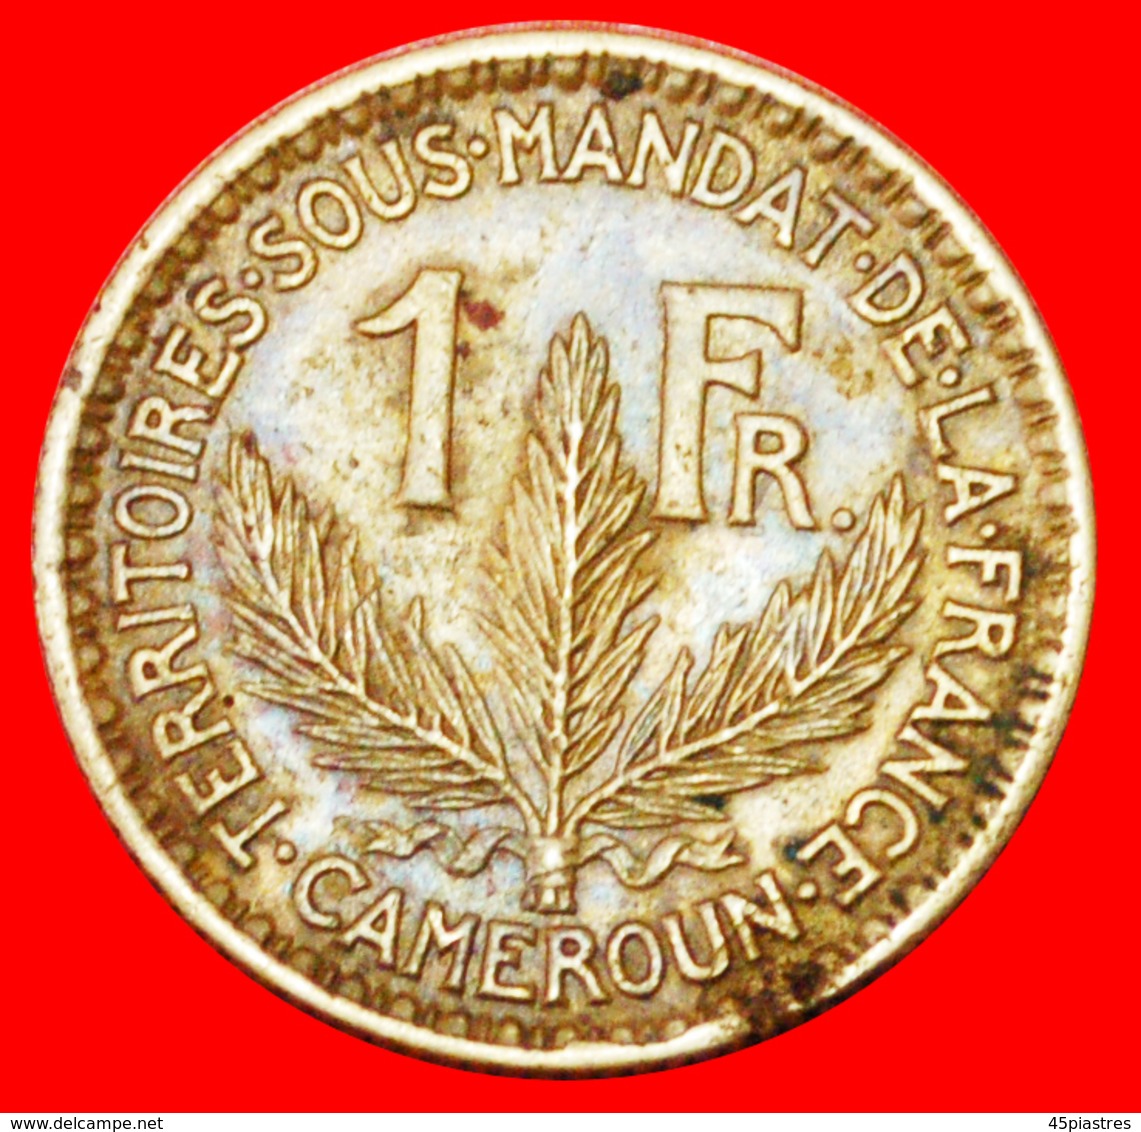 # FRANCE (1924-1926): CAMEROON ★ 1 FRANC 1926! LOW START ★ NO RESERVE! - Kameroen